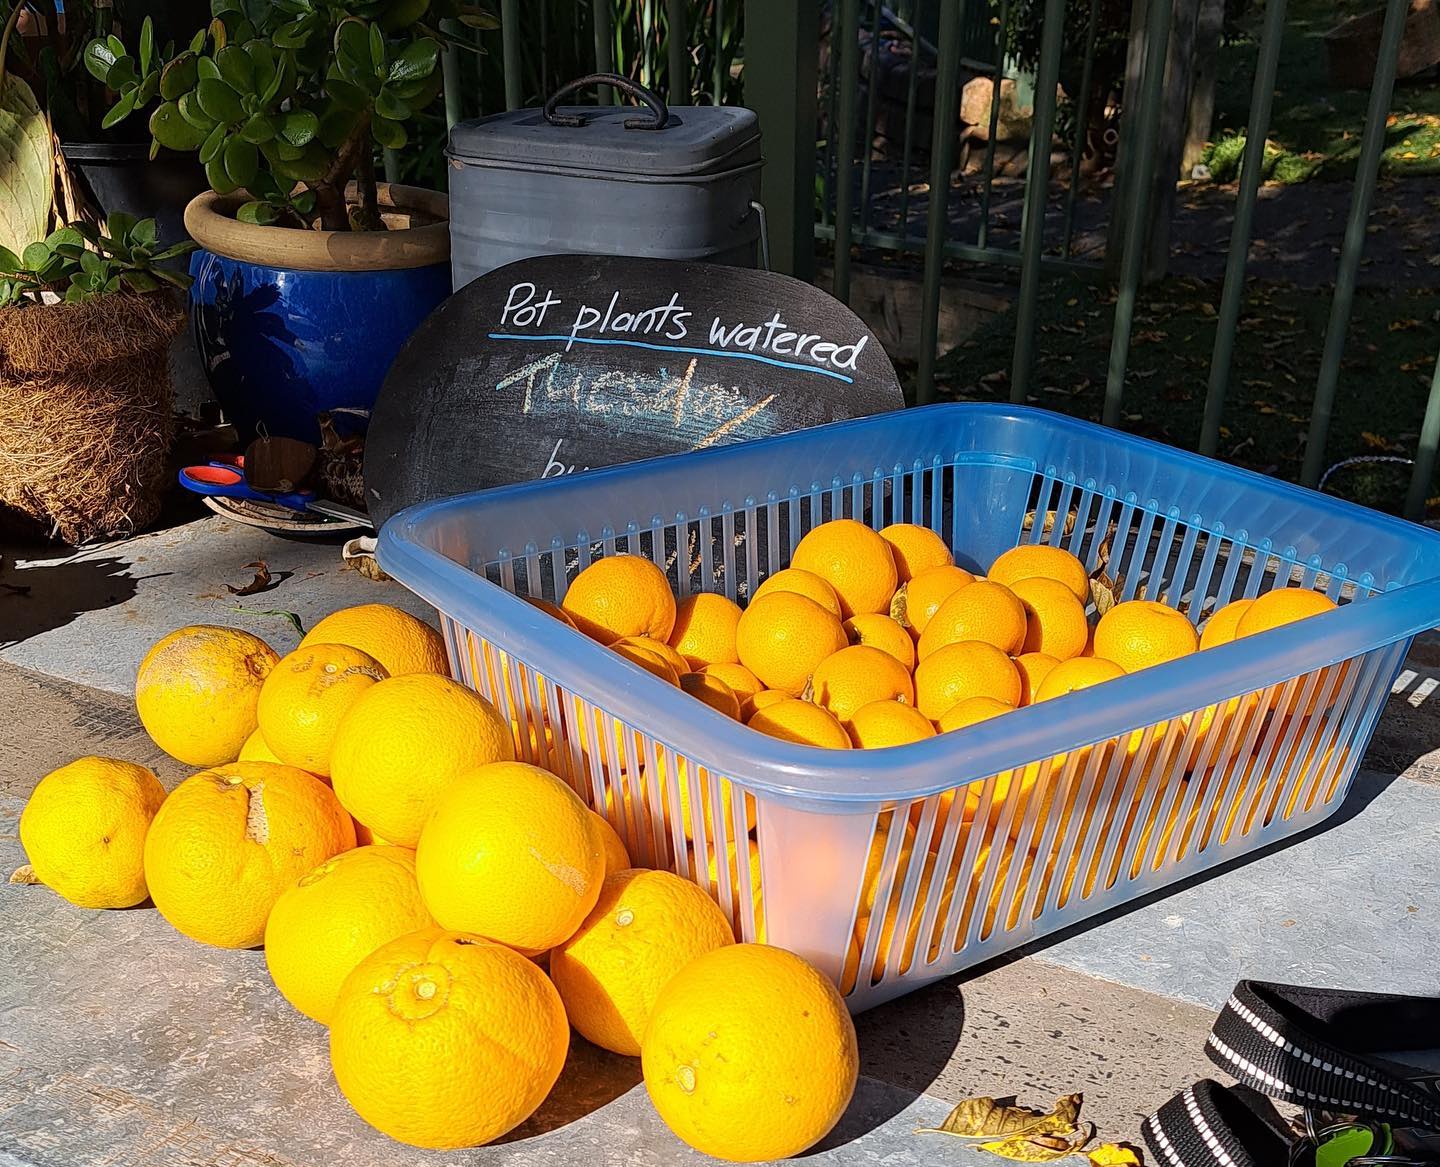 Oranges harvested in a community garden